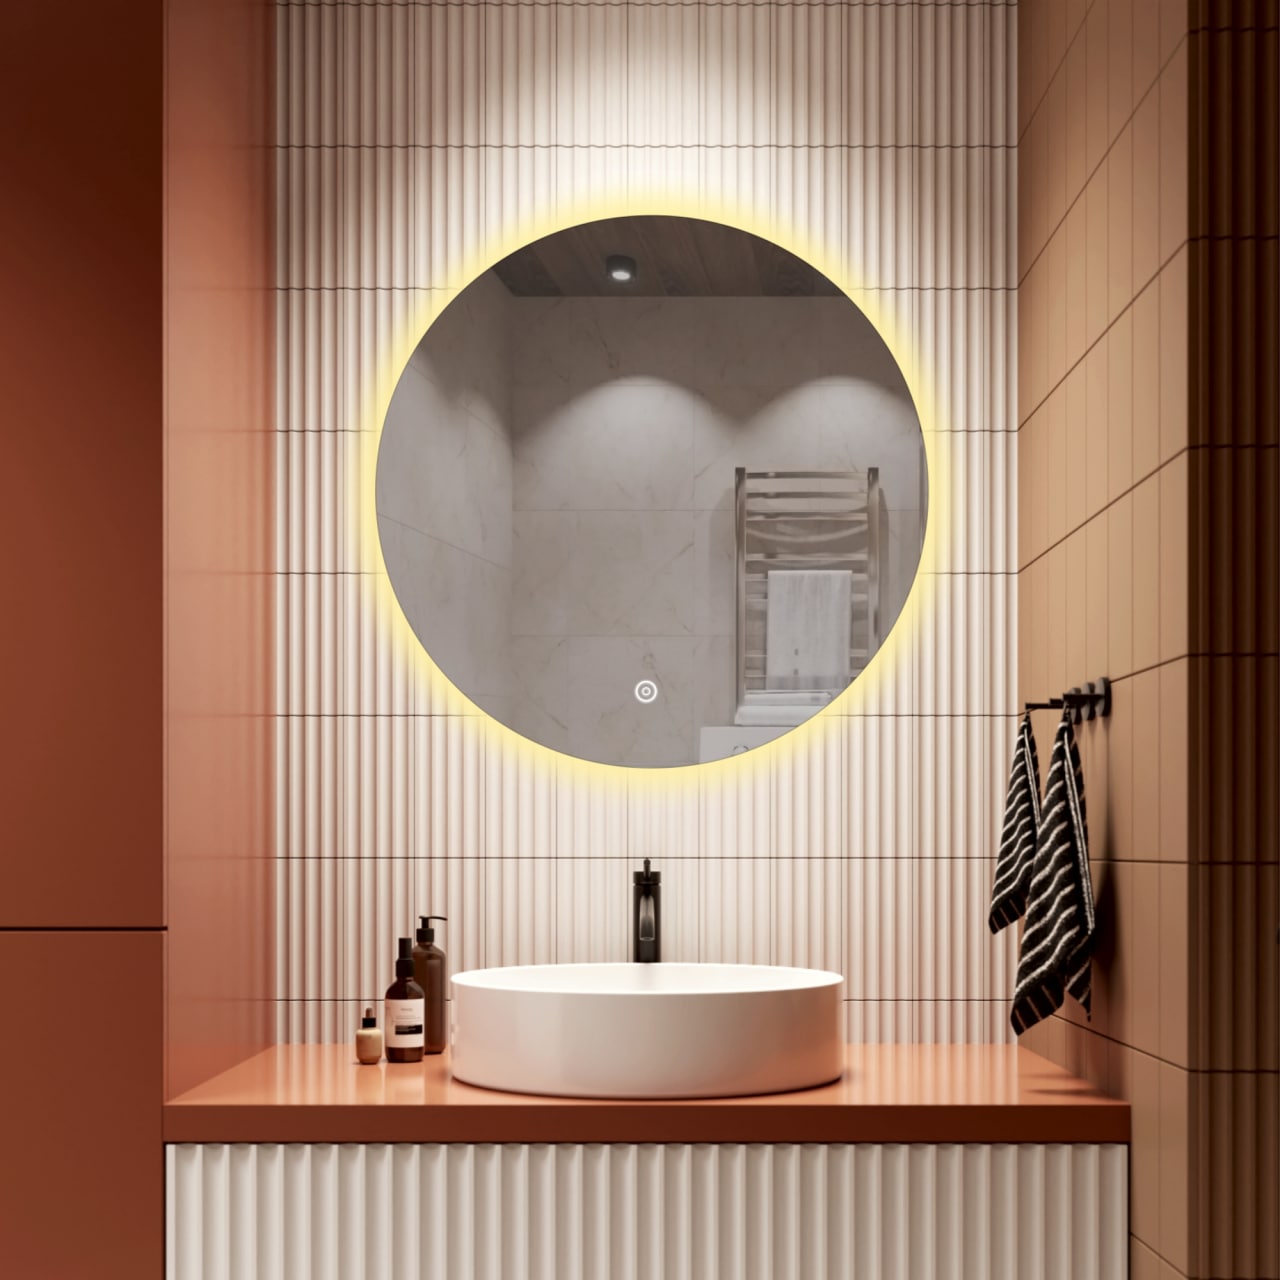 Зеркало для ванной Alfa Mirrors с теплой подсветкой 3200К круглое 90см, арт. Na-9Na-9t